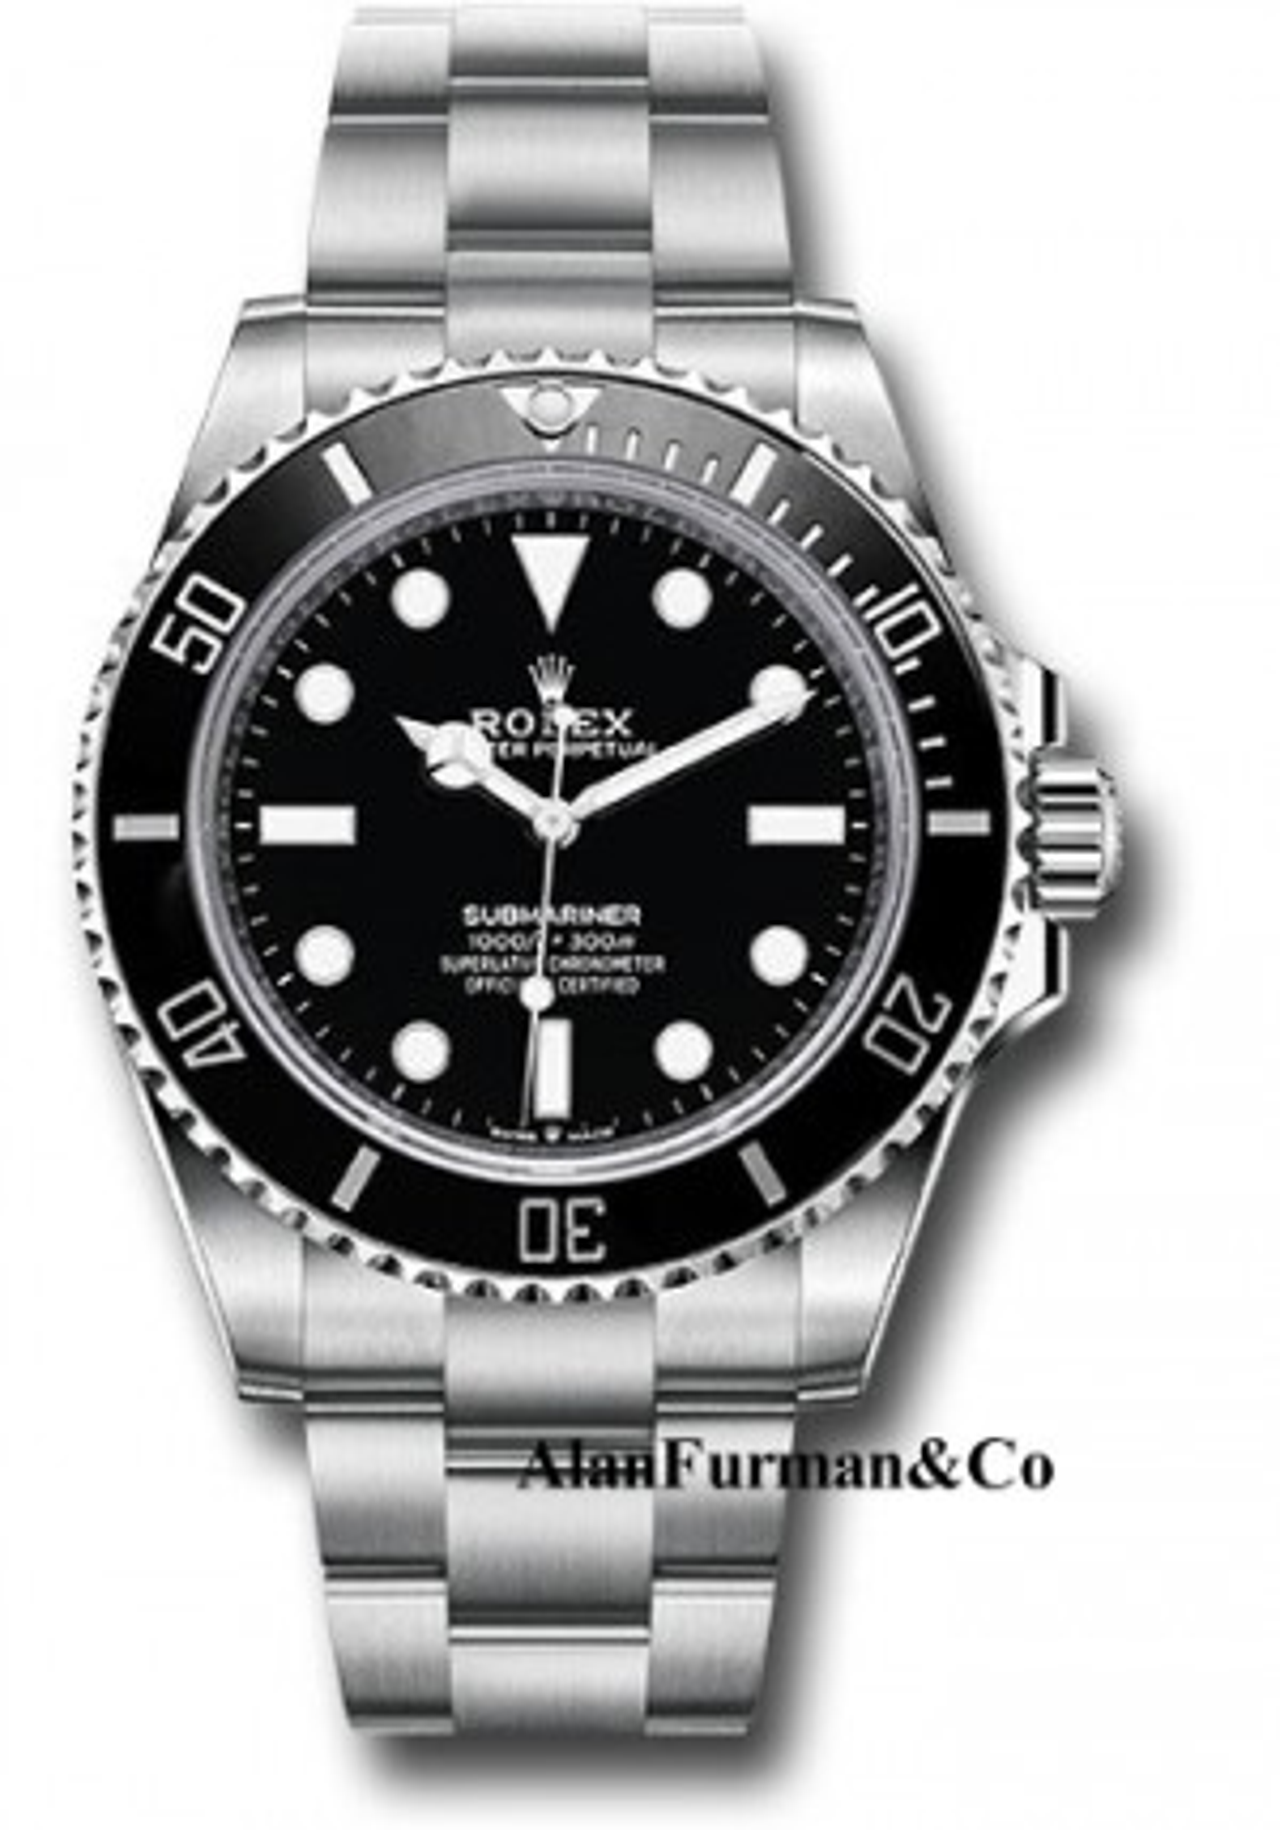 Rolex Submariner or Rolex Steel Model 124060 watch is very popular